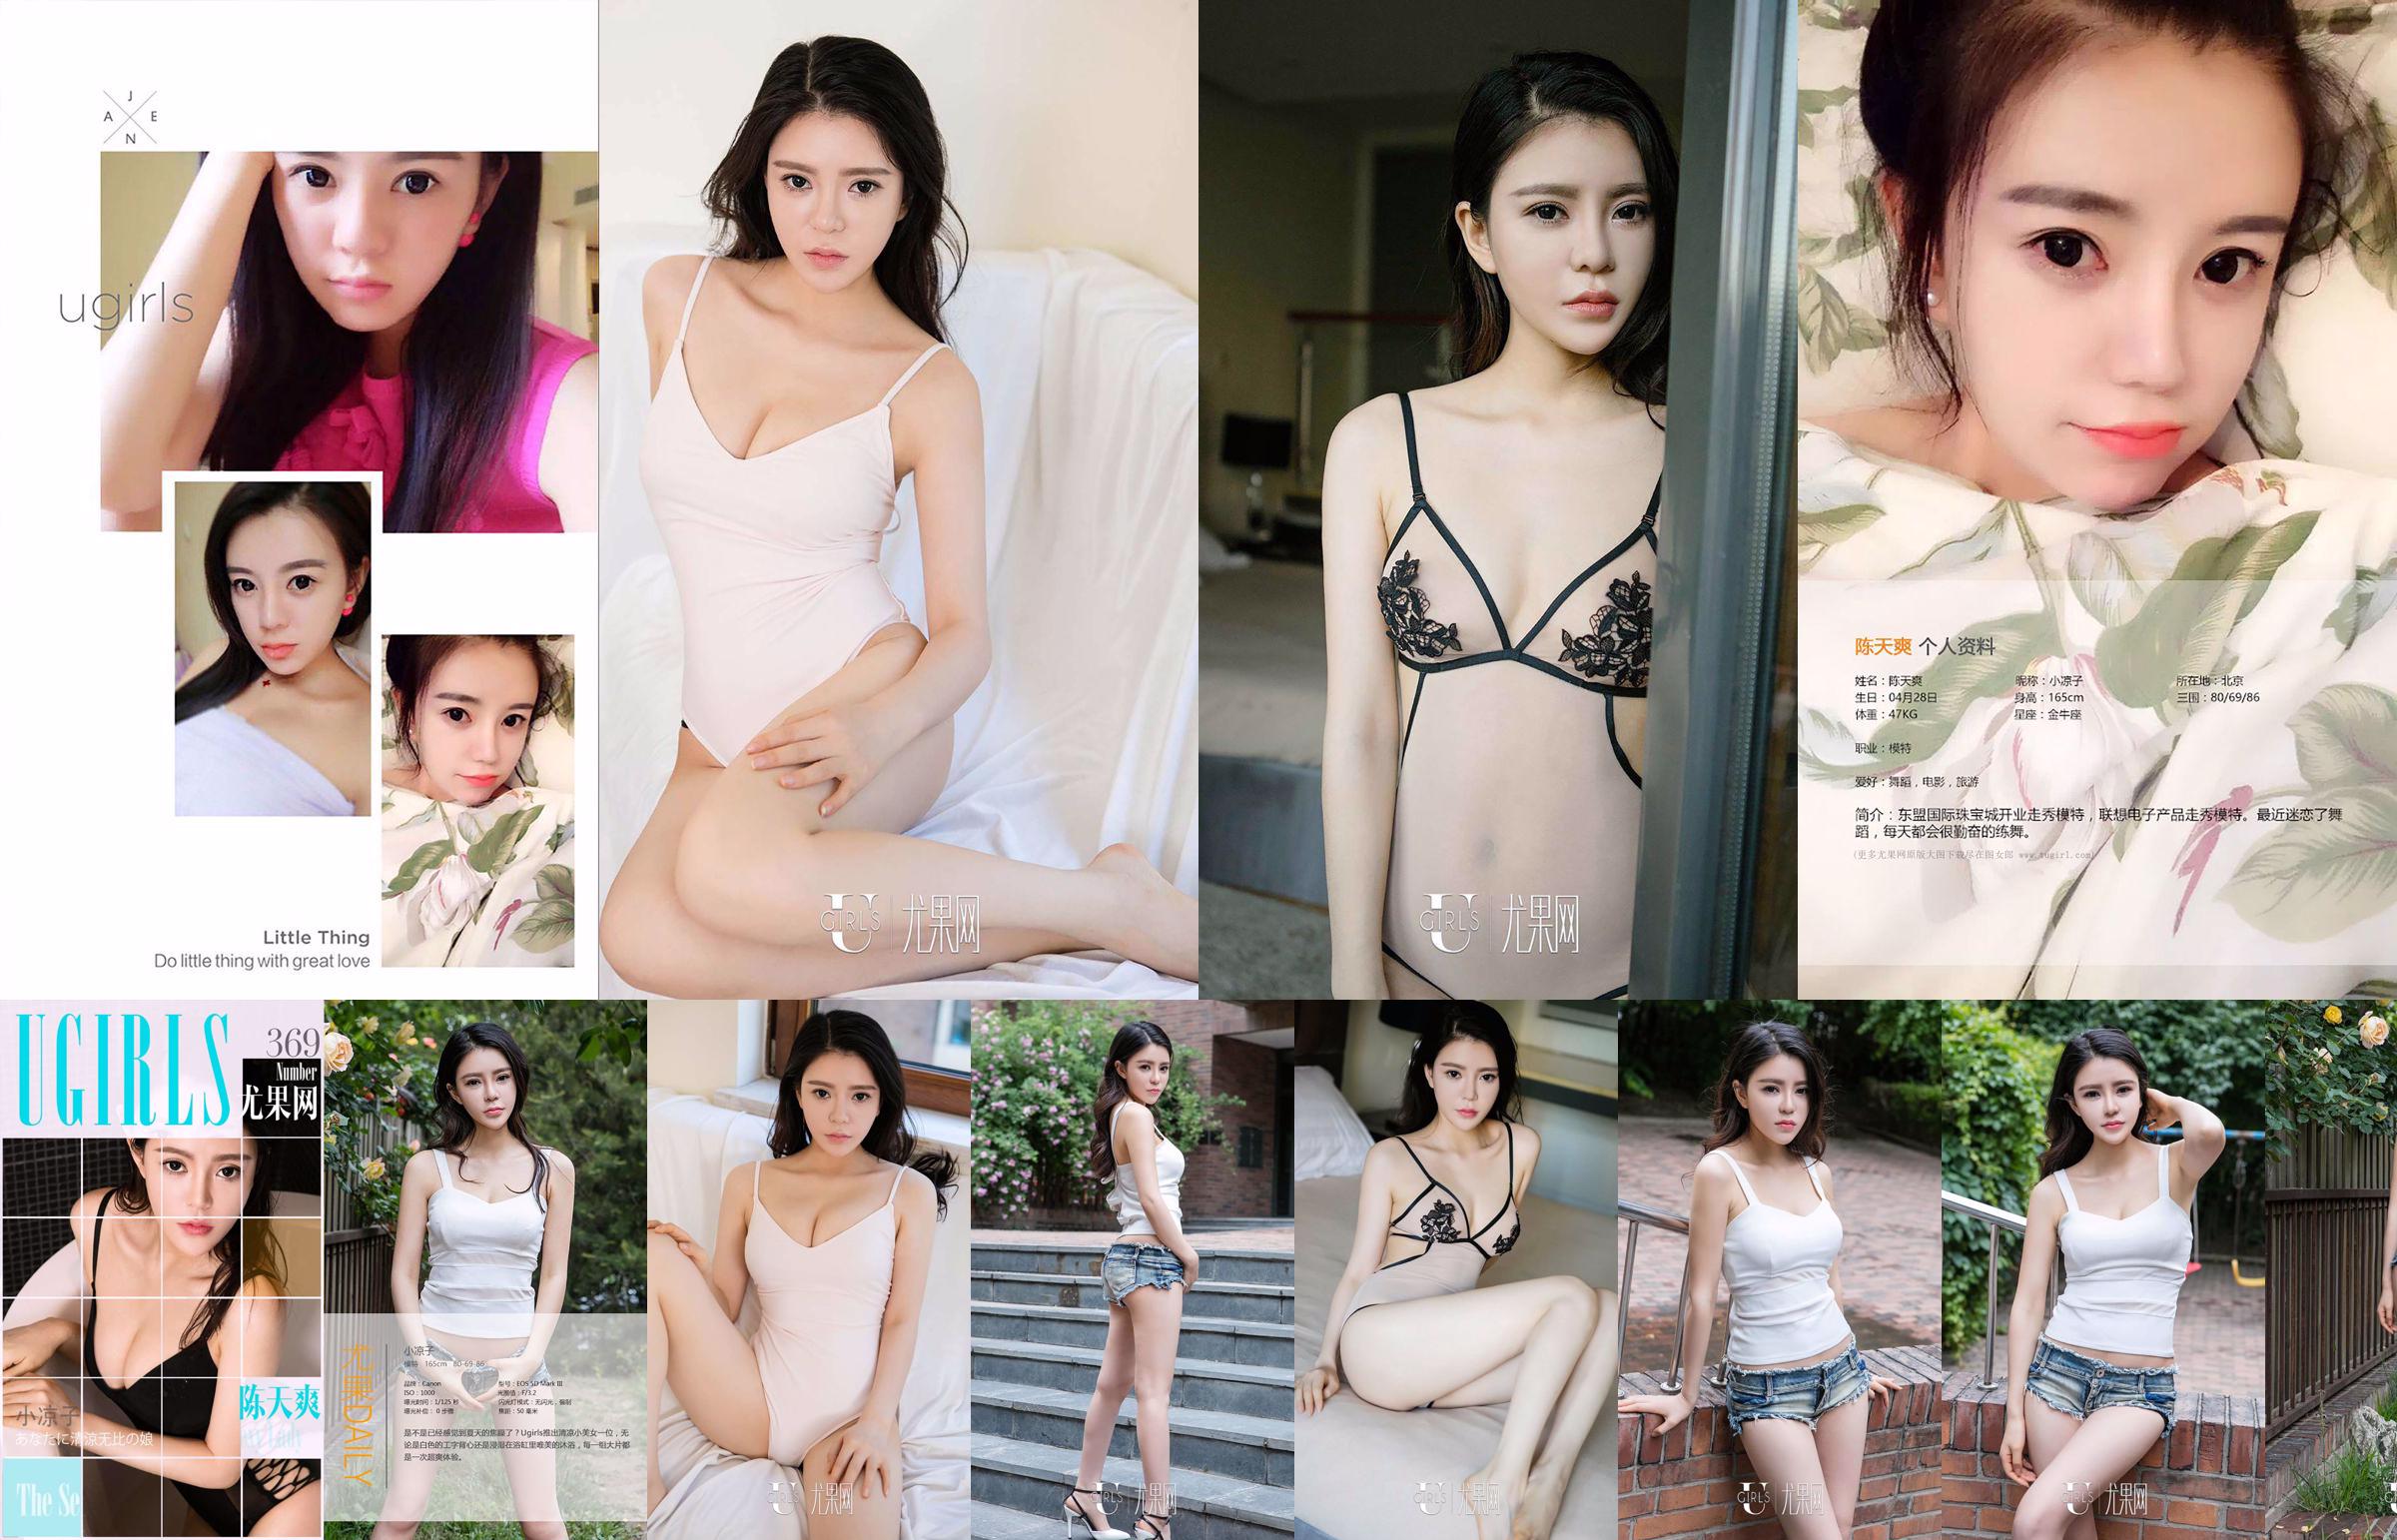 Chen Tianshuang "Se ve hermosa" [爱 优 物 Ugirls] No 395 No.af571c Página 1